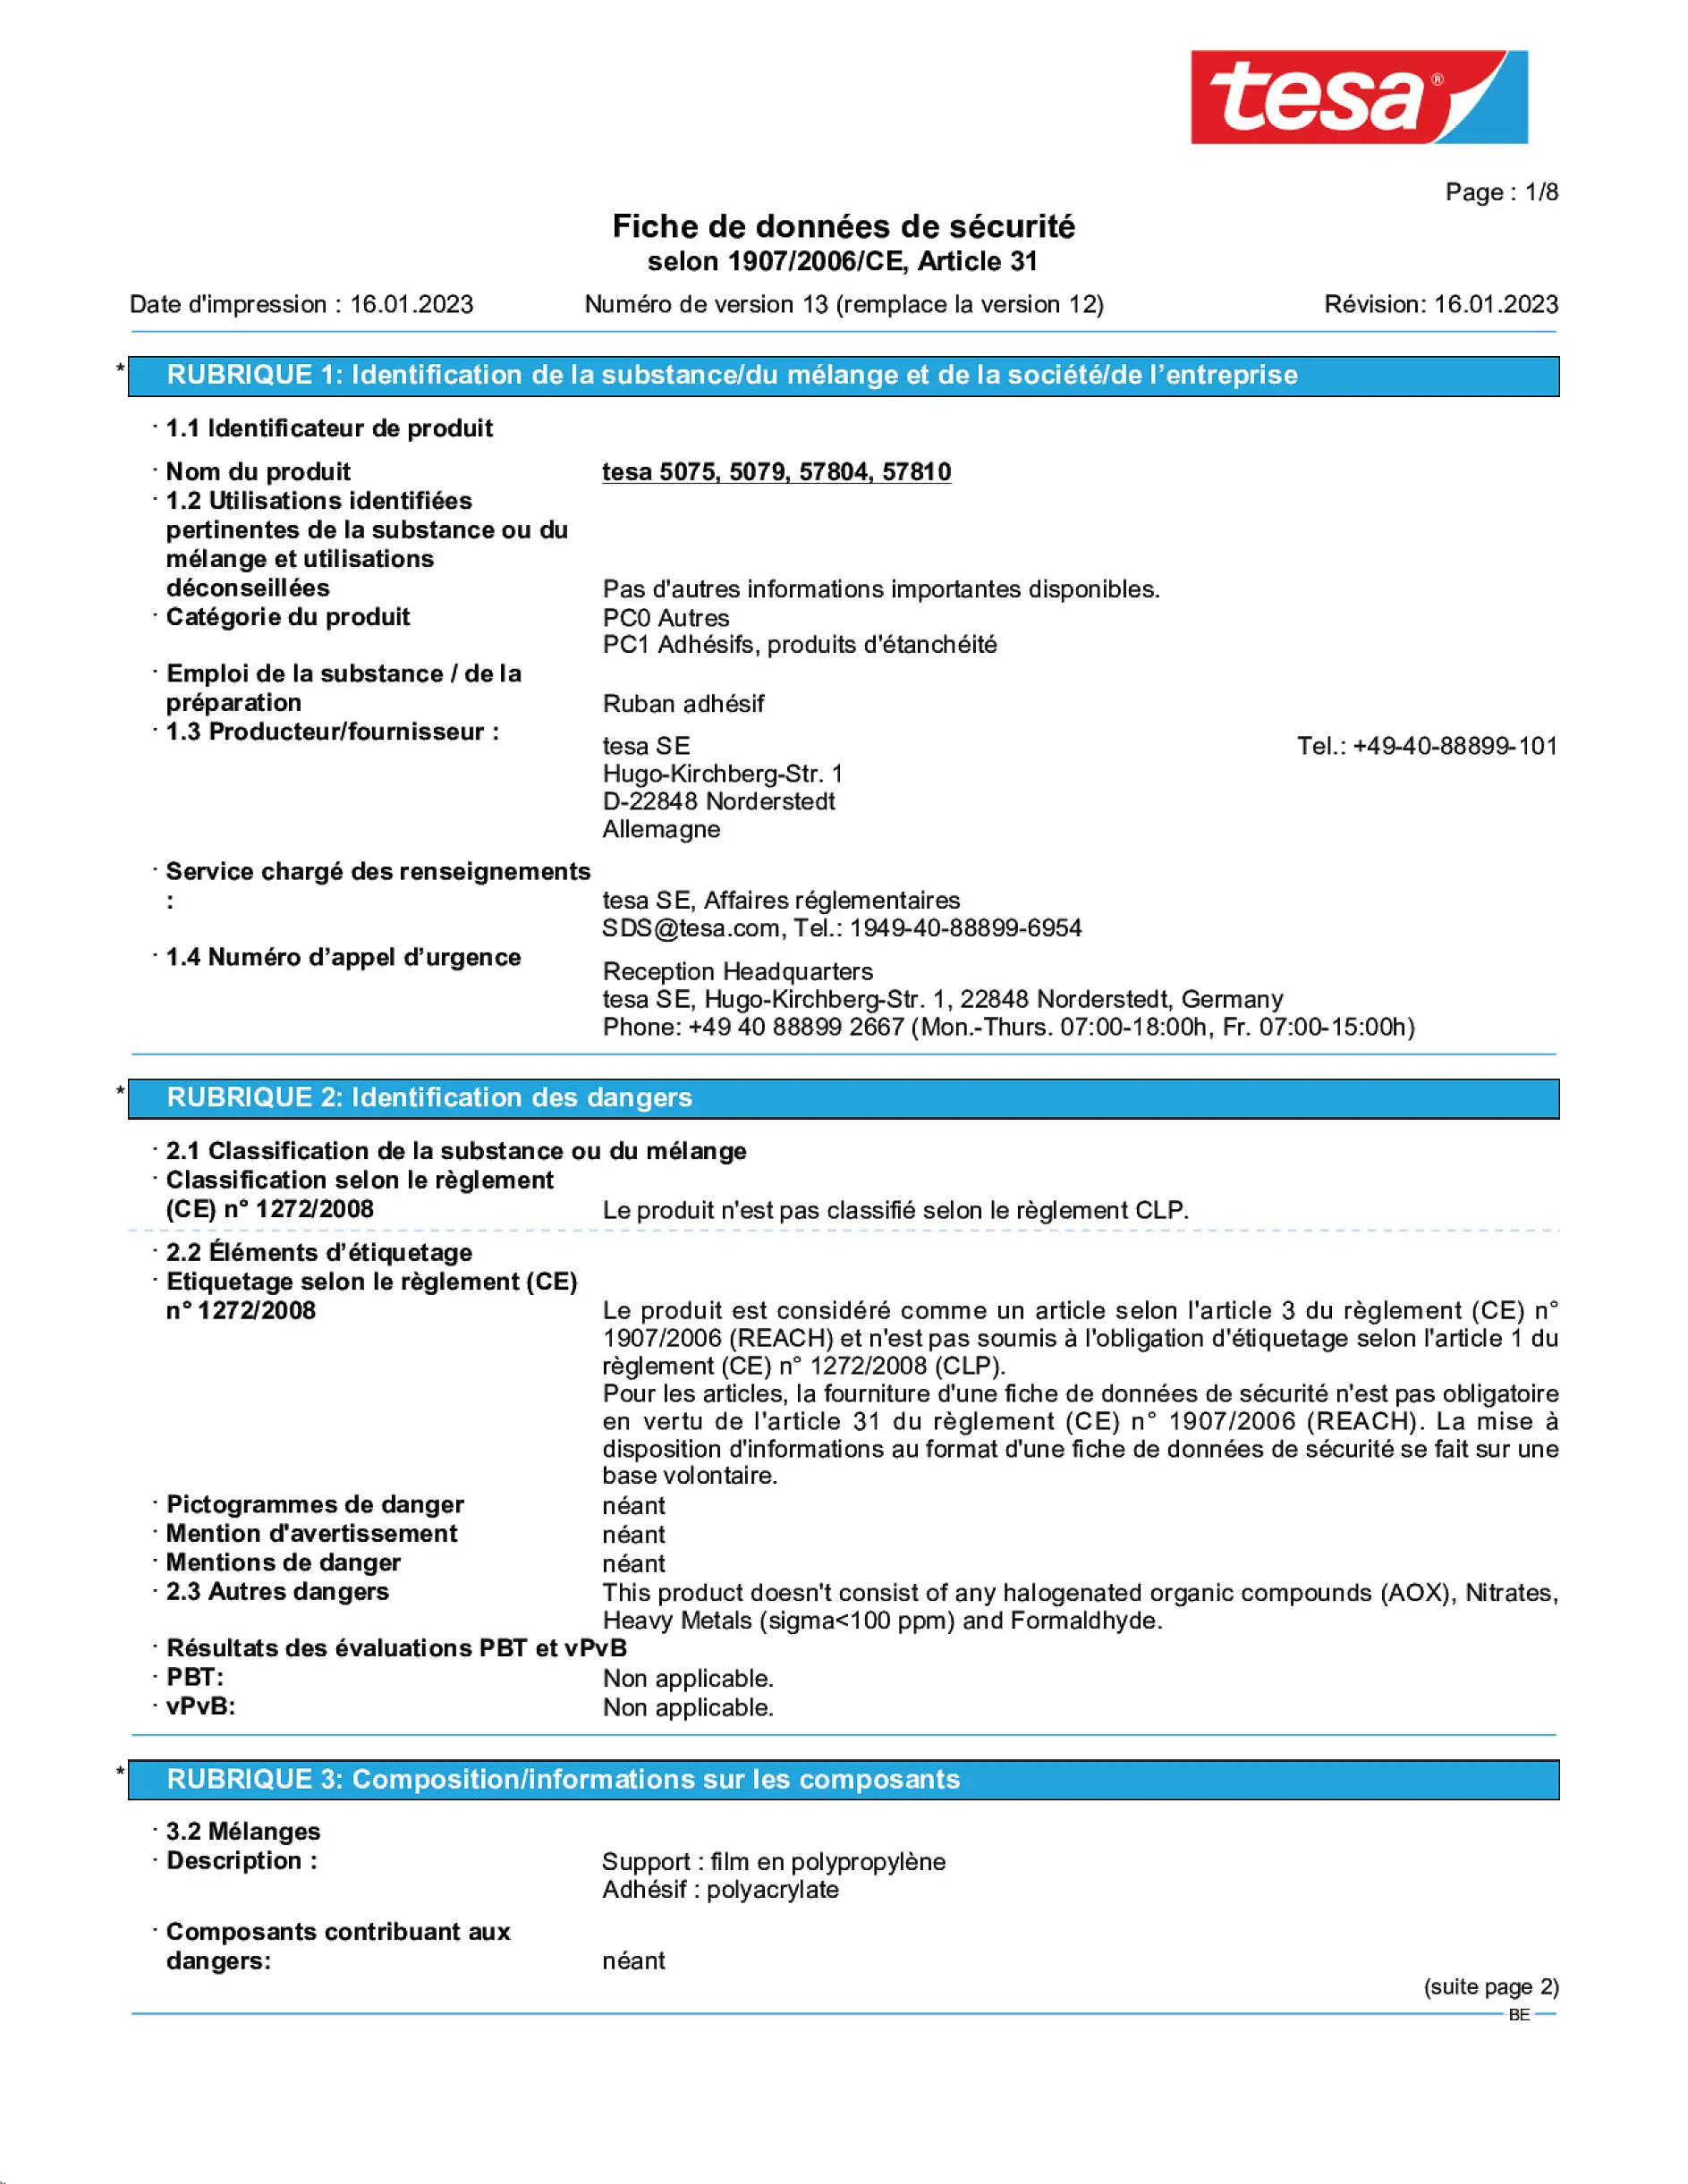 Safety data sheet_tesapack® 05079_nl-BE_v13